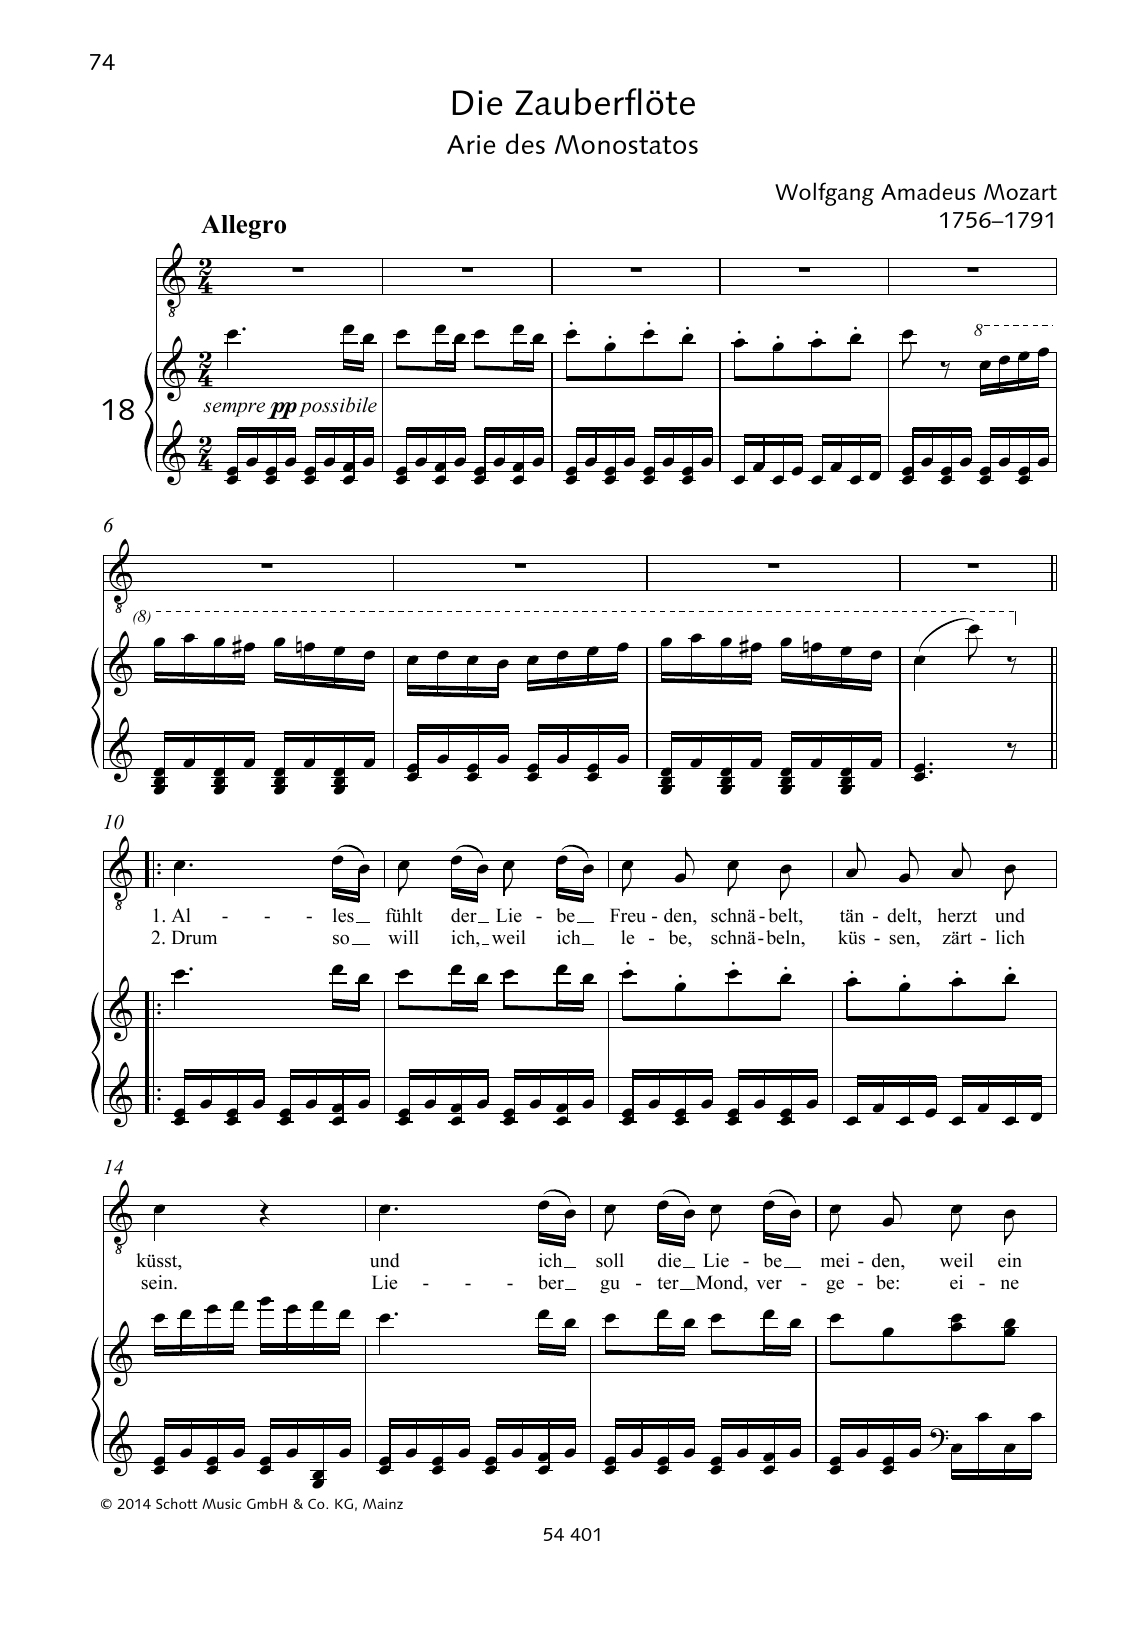 Wolfgang Amadeus Mozart Alles fühlt der Liebe Freuden sheet music notes and chords arranged for Piano & Vocal